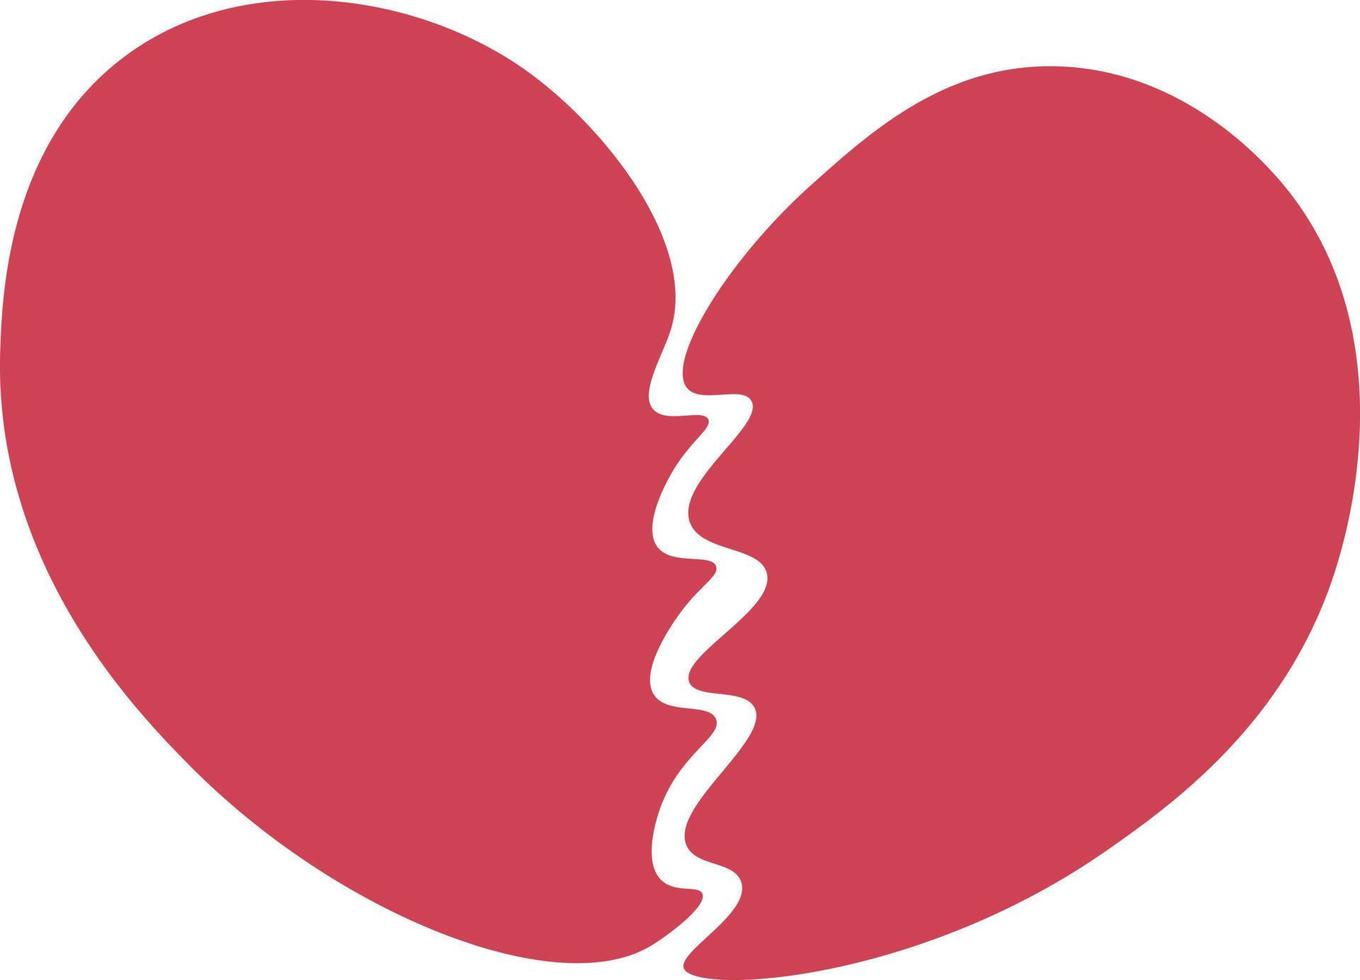 Red heartbeat broken heart or divorce flat vector icon